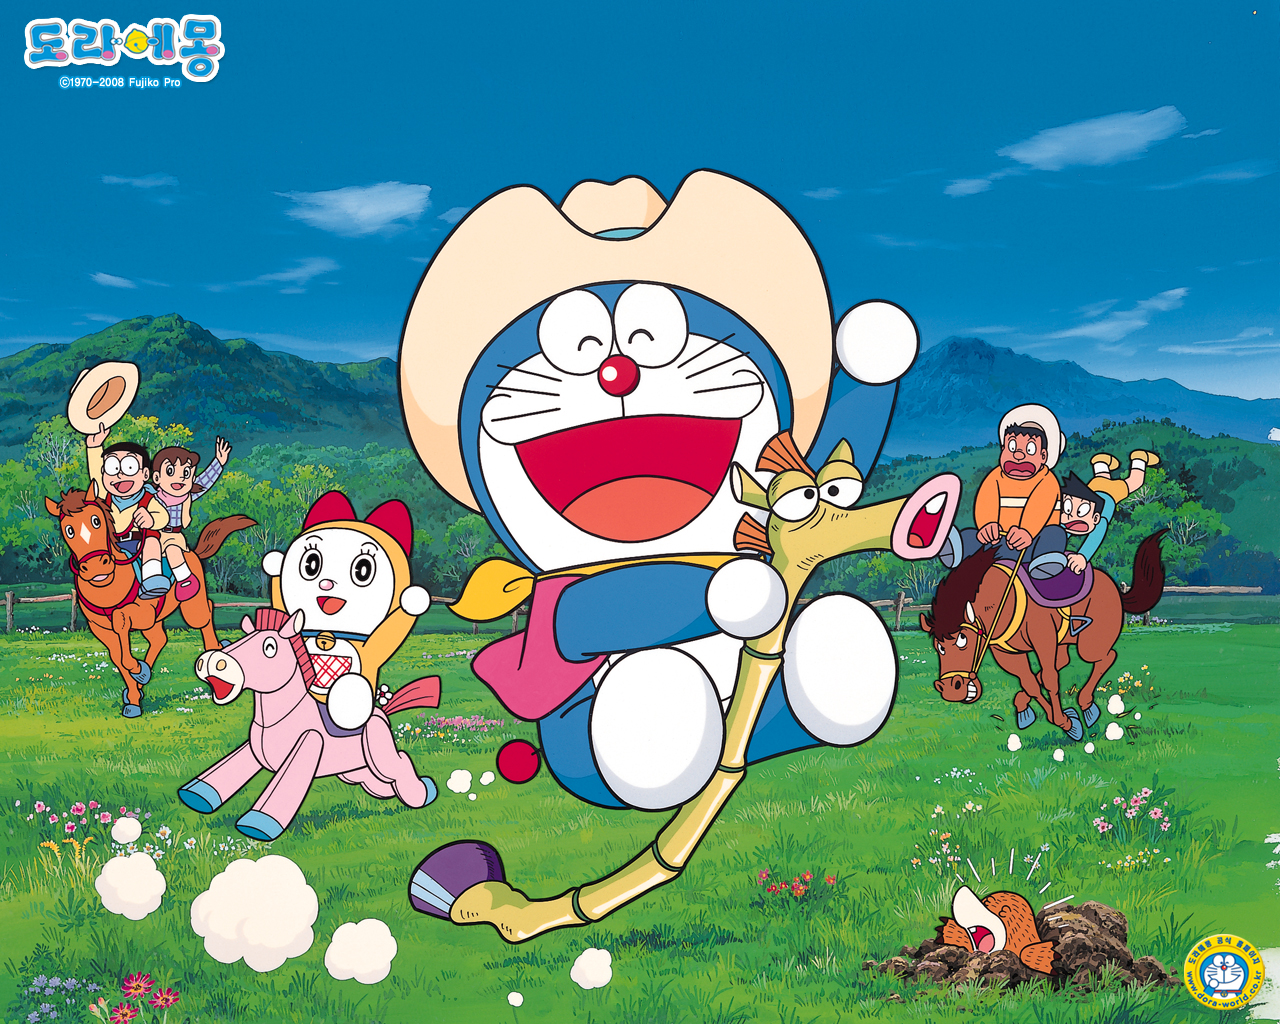 Cartoon Doraemon Leisure Time Series Action Figure Toys Dolls Kawaii Dorami Doraemon  Anime Figures Decoration Gift for Children - AliExpress